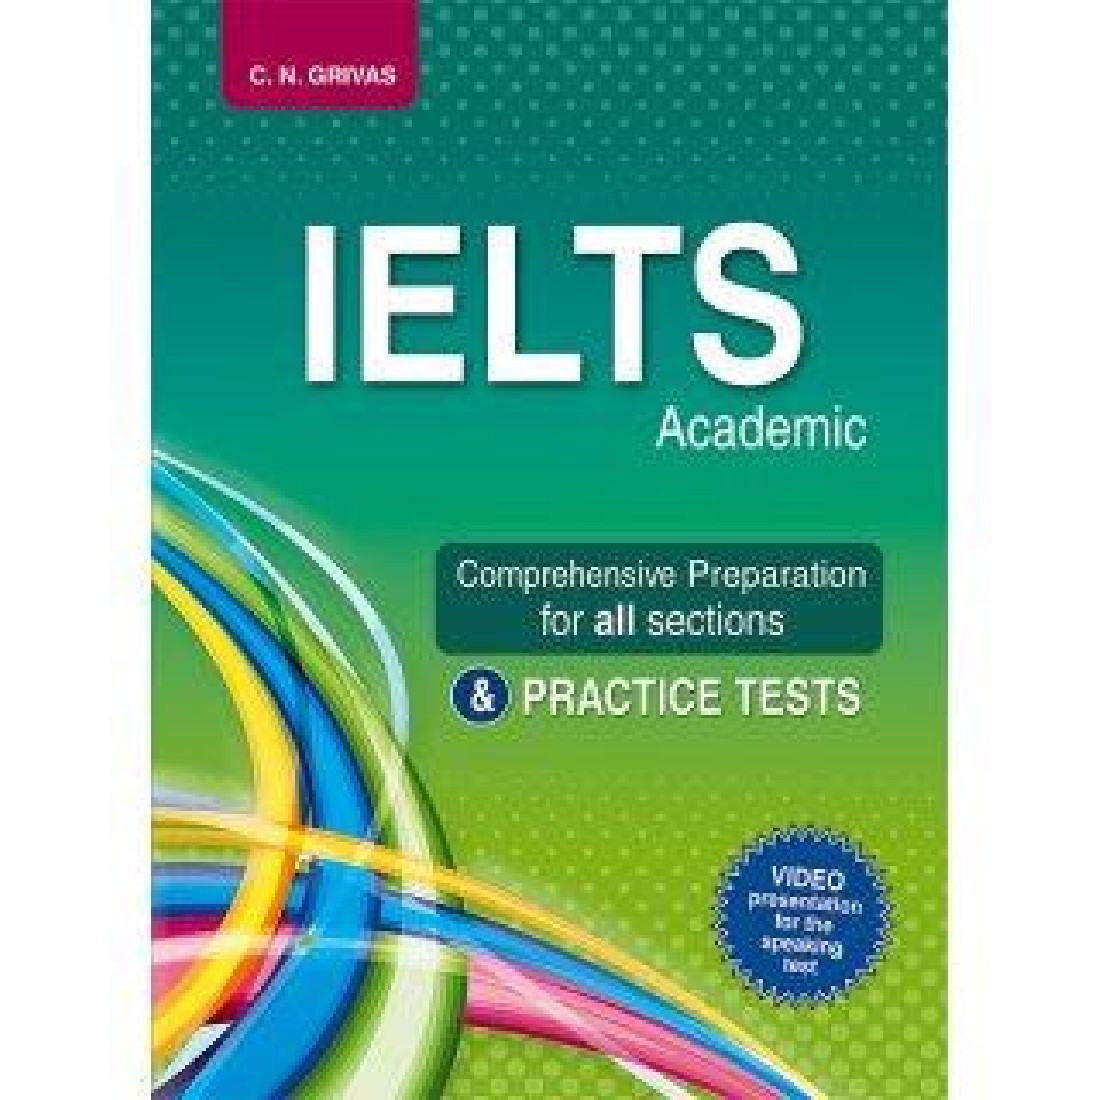 English teachers tests. IELTS. IELTS (Академический). IELTS preparation. IELTS Academic Practice Tests.